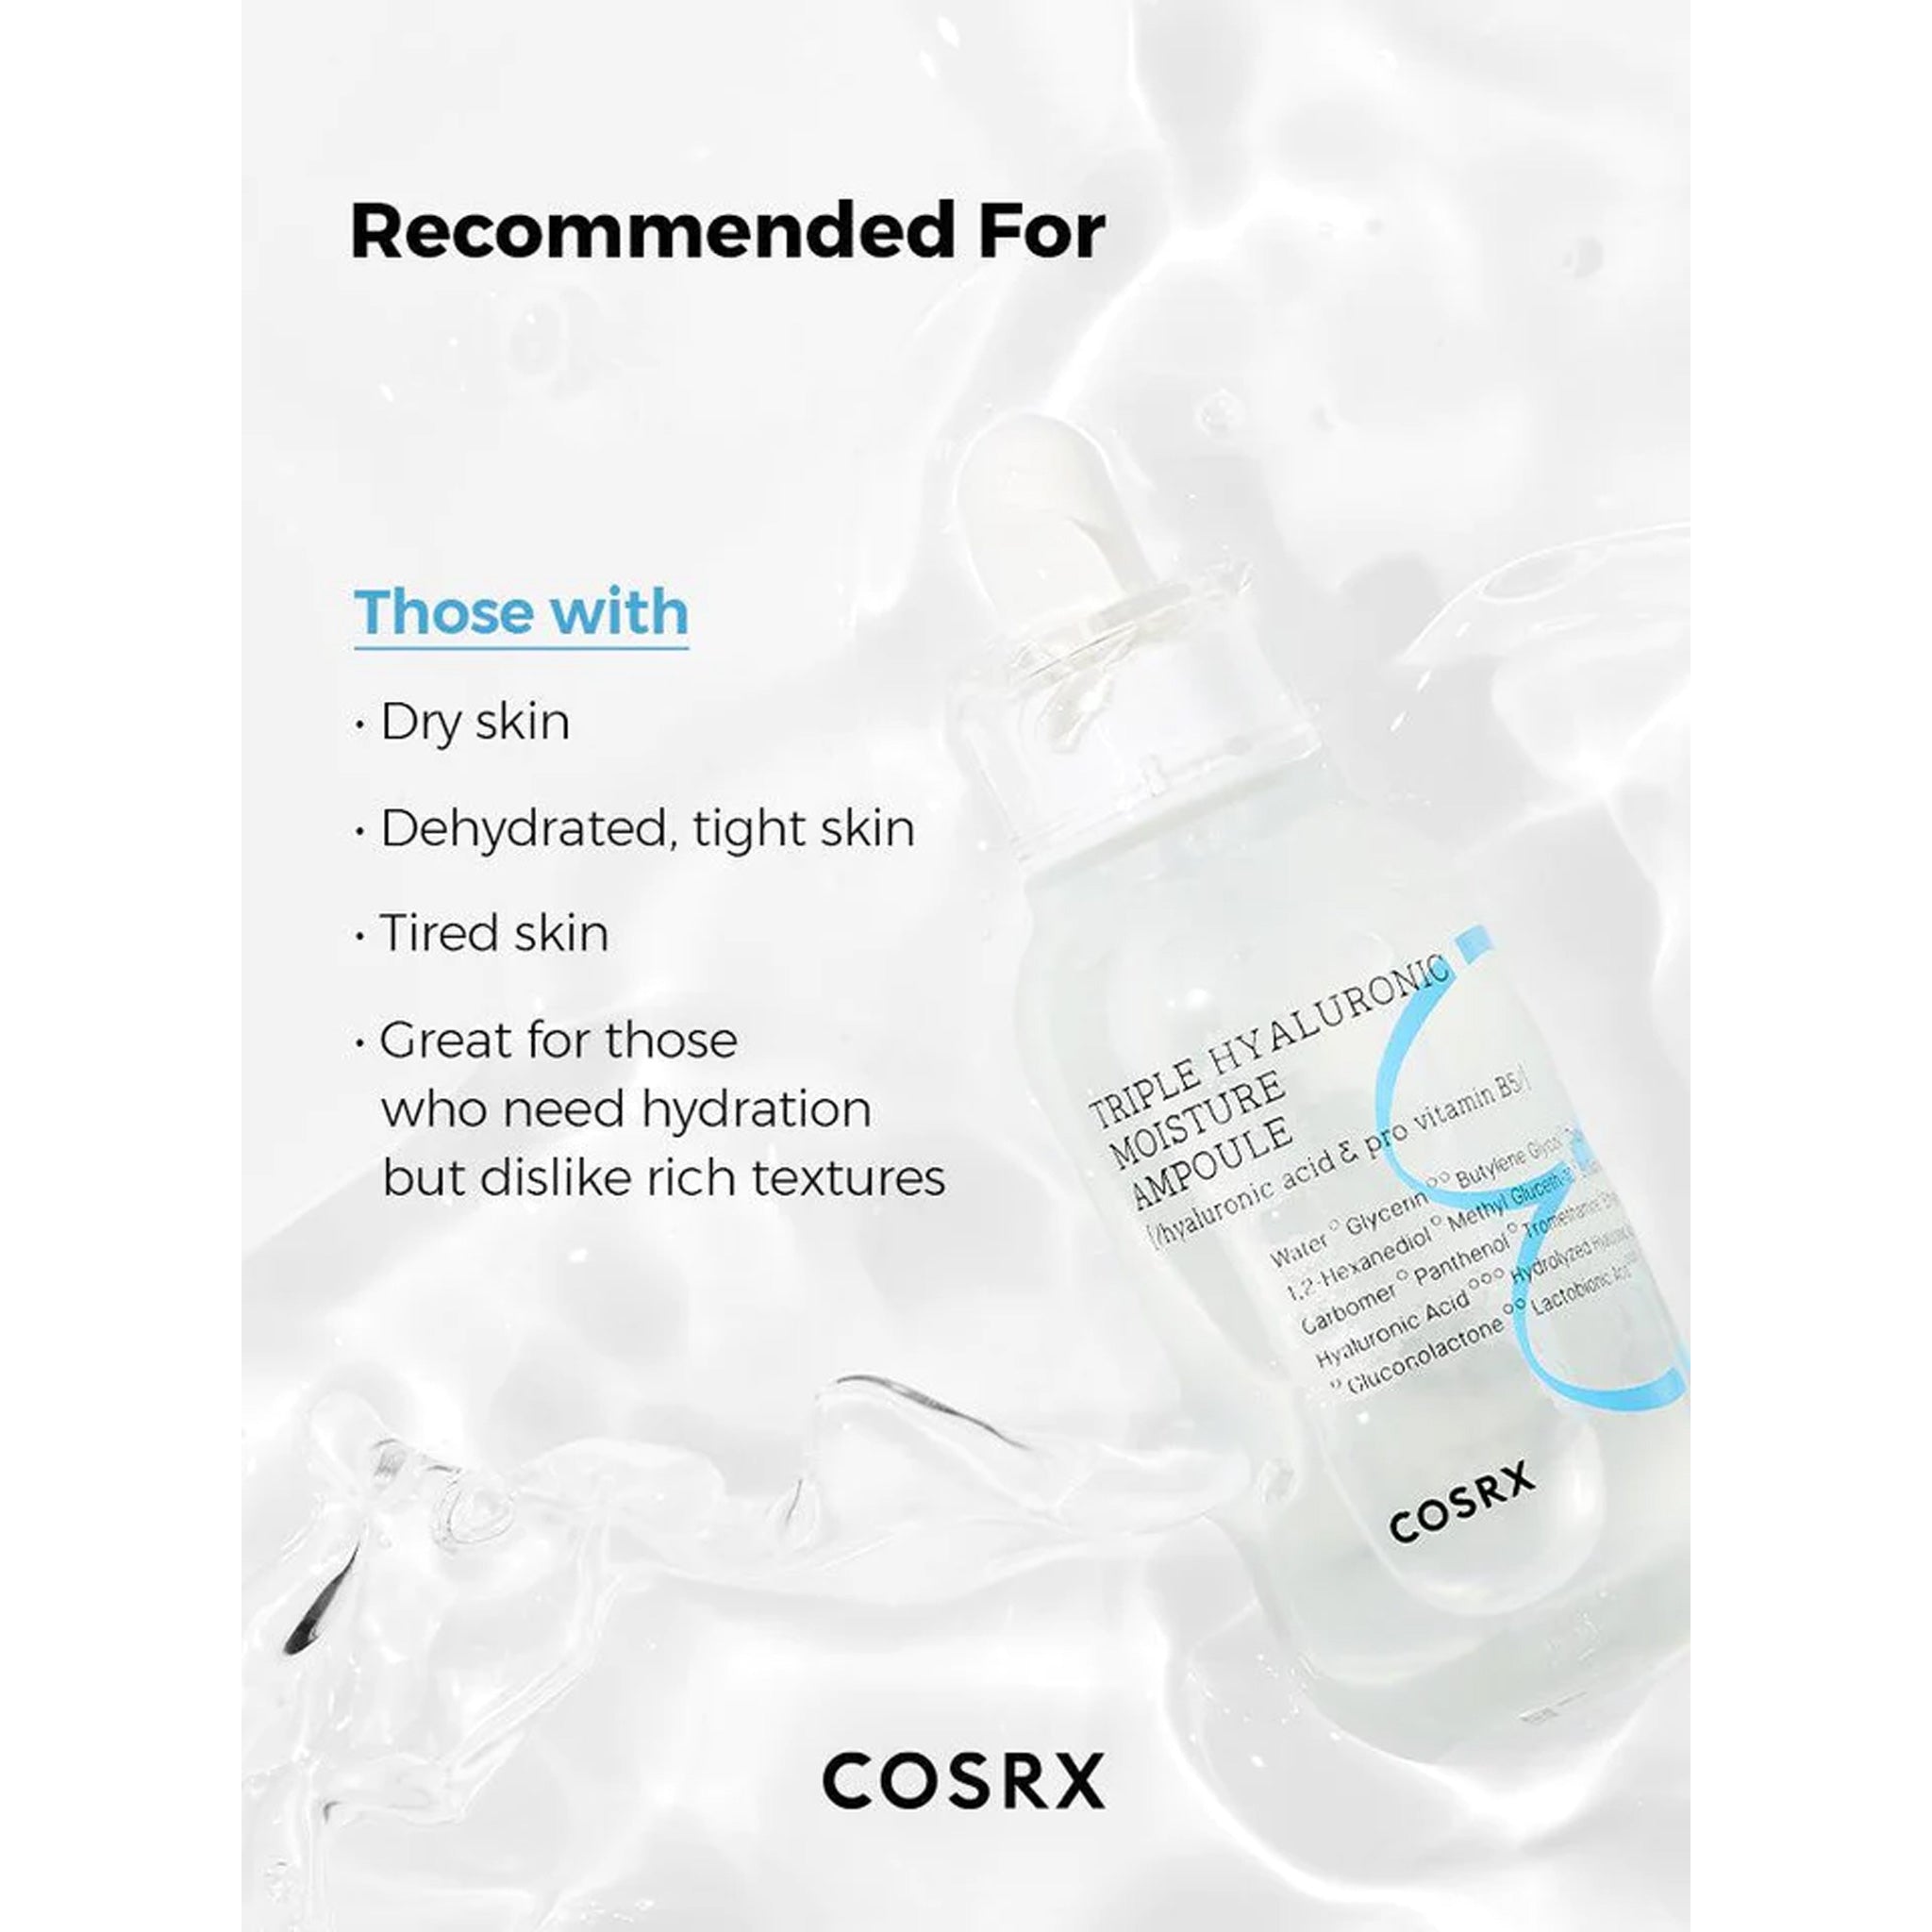 COSRX 三重透明质酸保湿安瓶 40ml